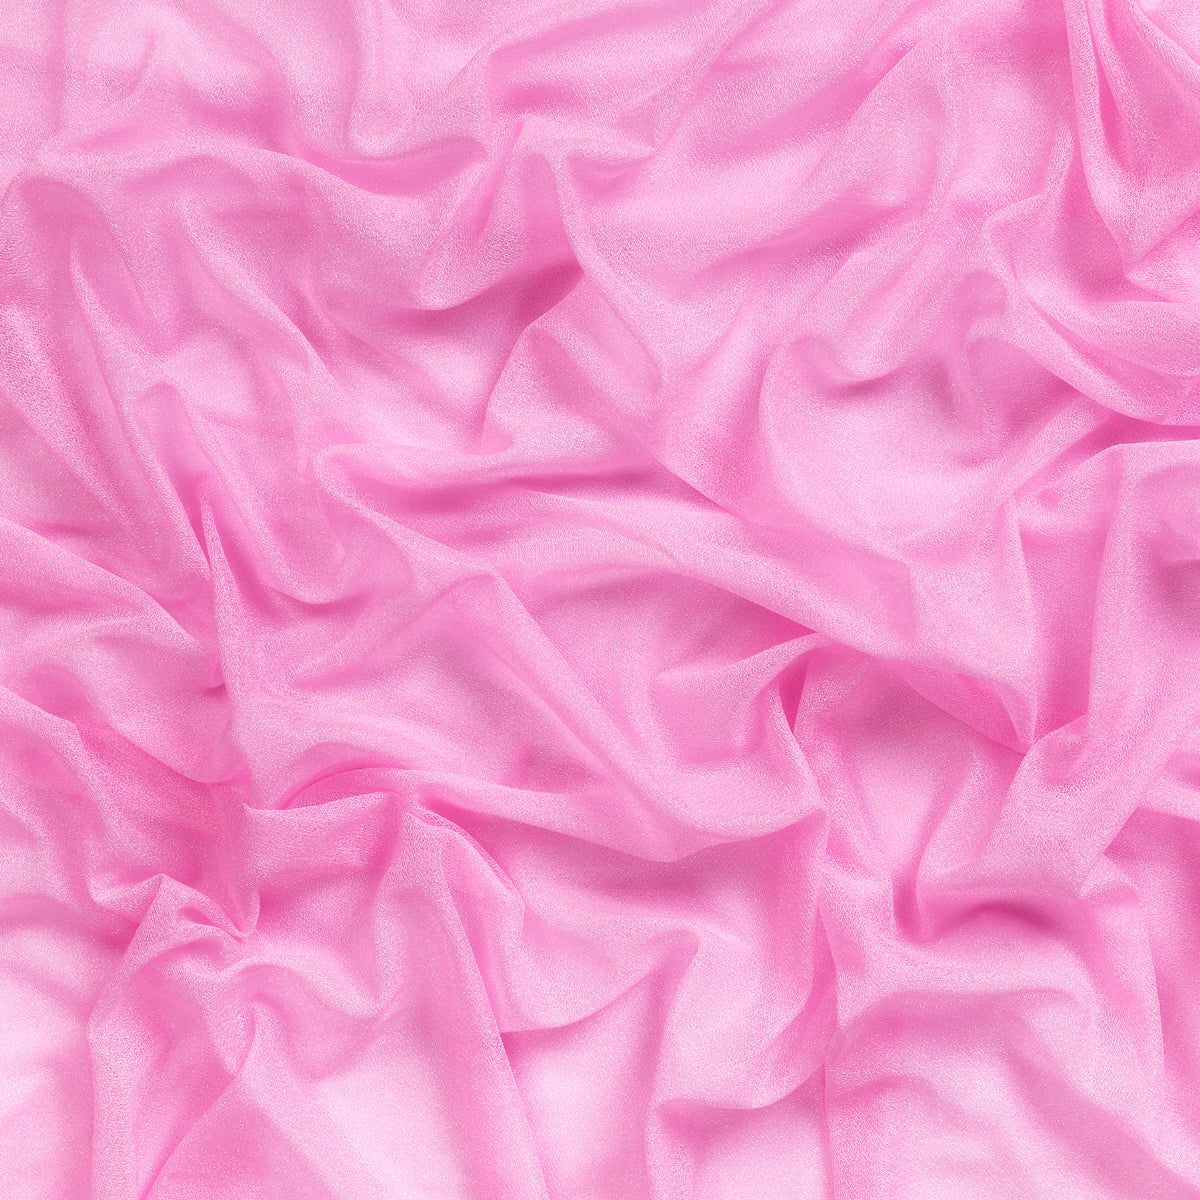 Bubblegum Pink,c09db12c-c92a-4e76-a18e-90800e103c76